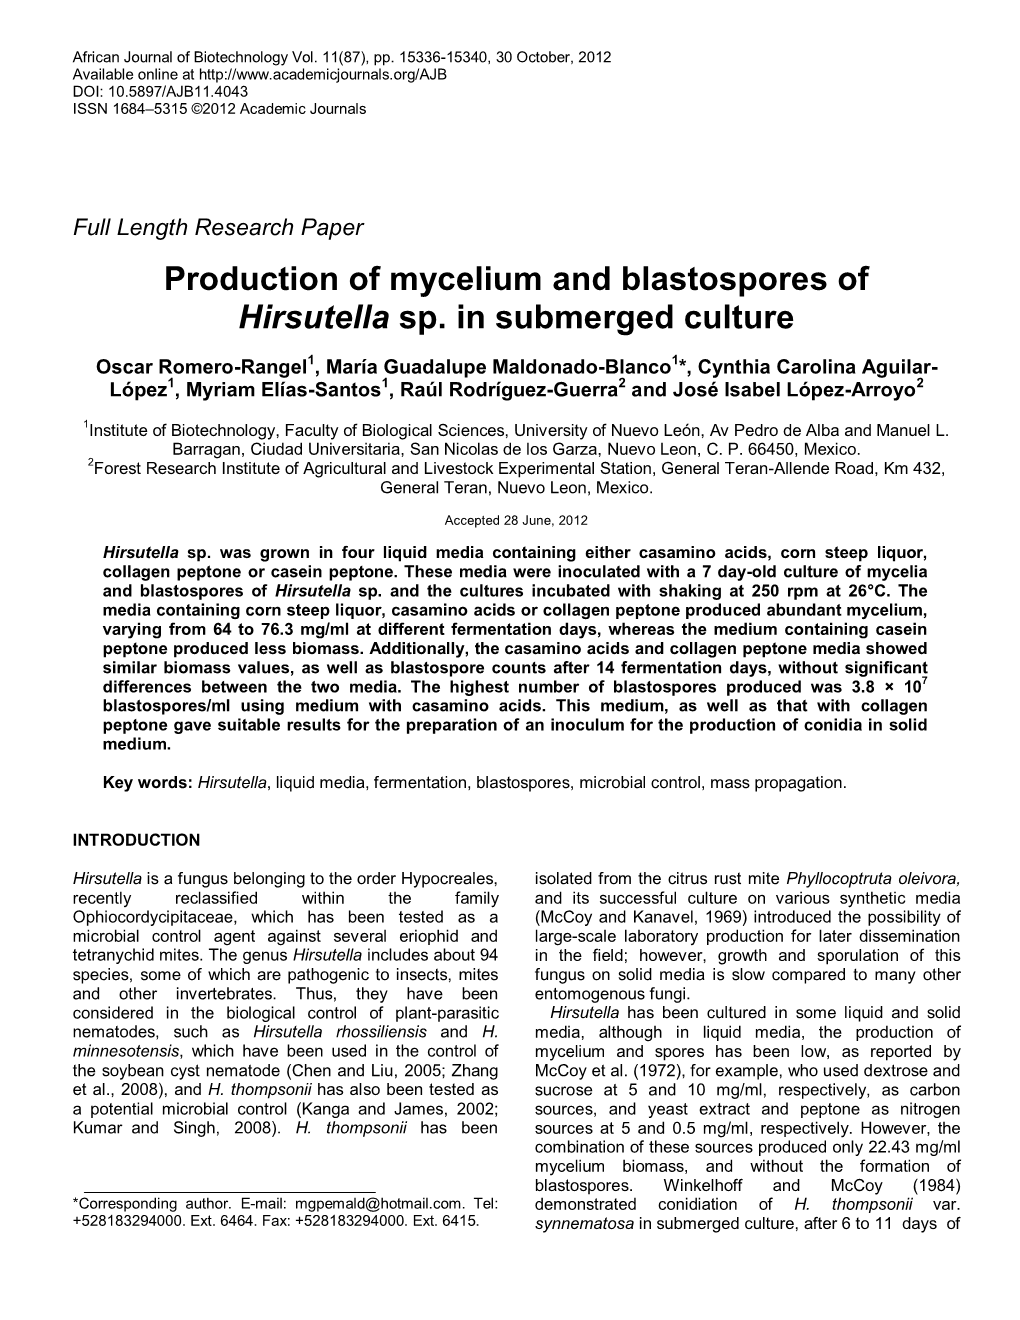 Production of Mycelia and Blastospores of Hirsutella Sp In